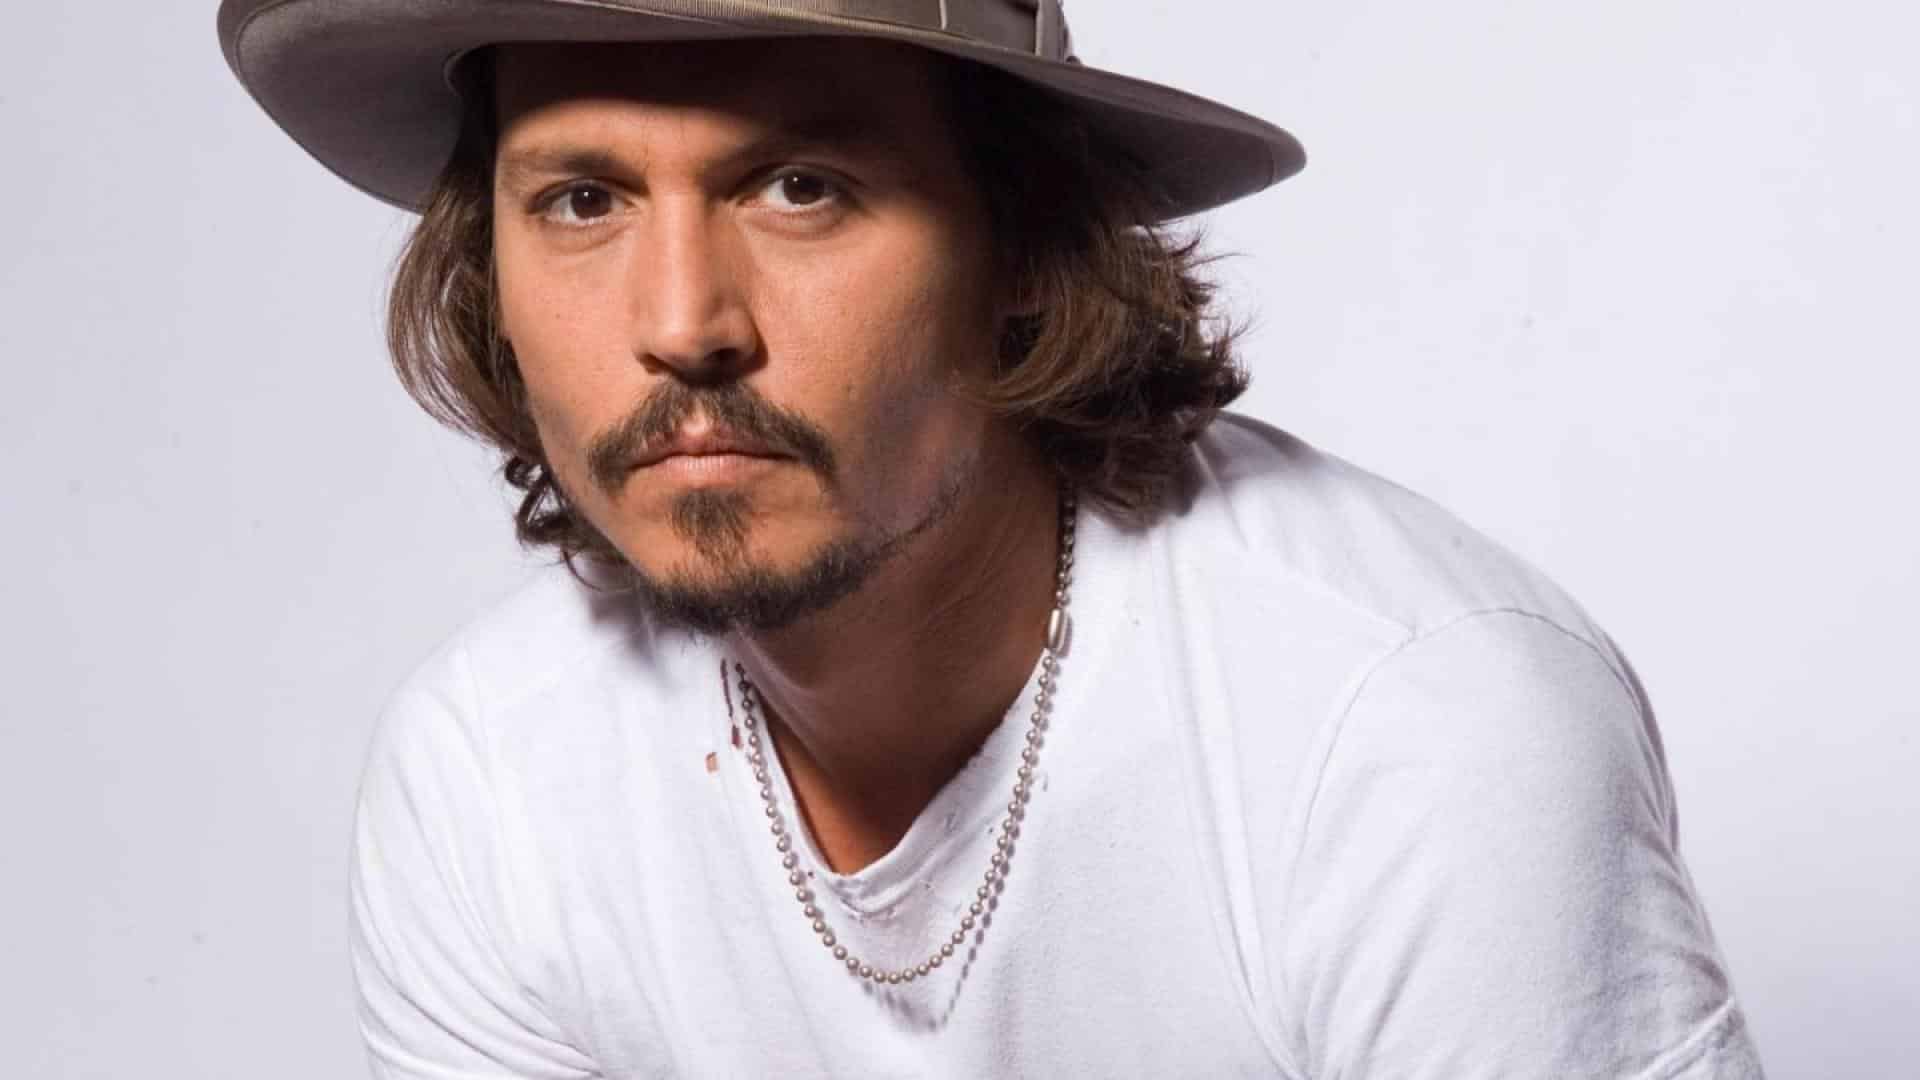 Johnny Depp x Amber Heard: fã do ator diz já ter gasto US$ 30 mil